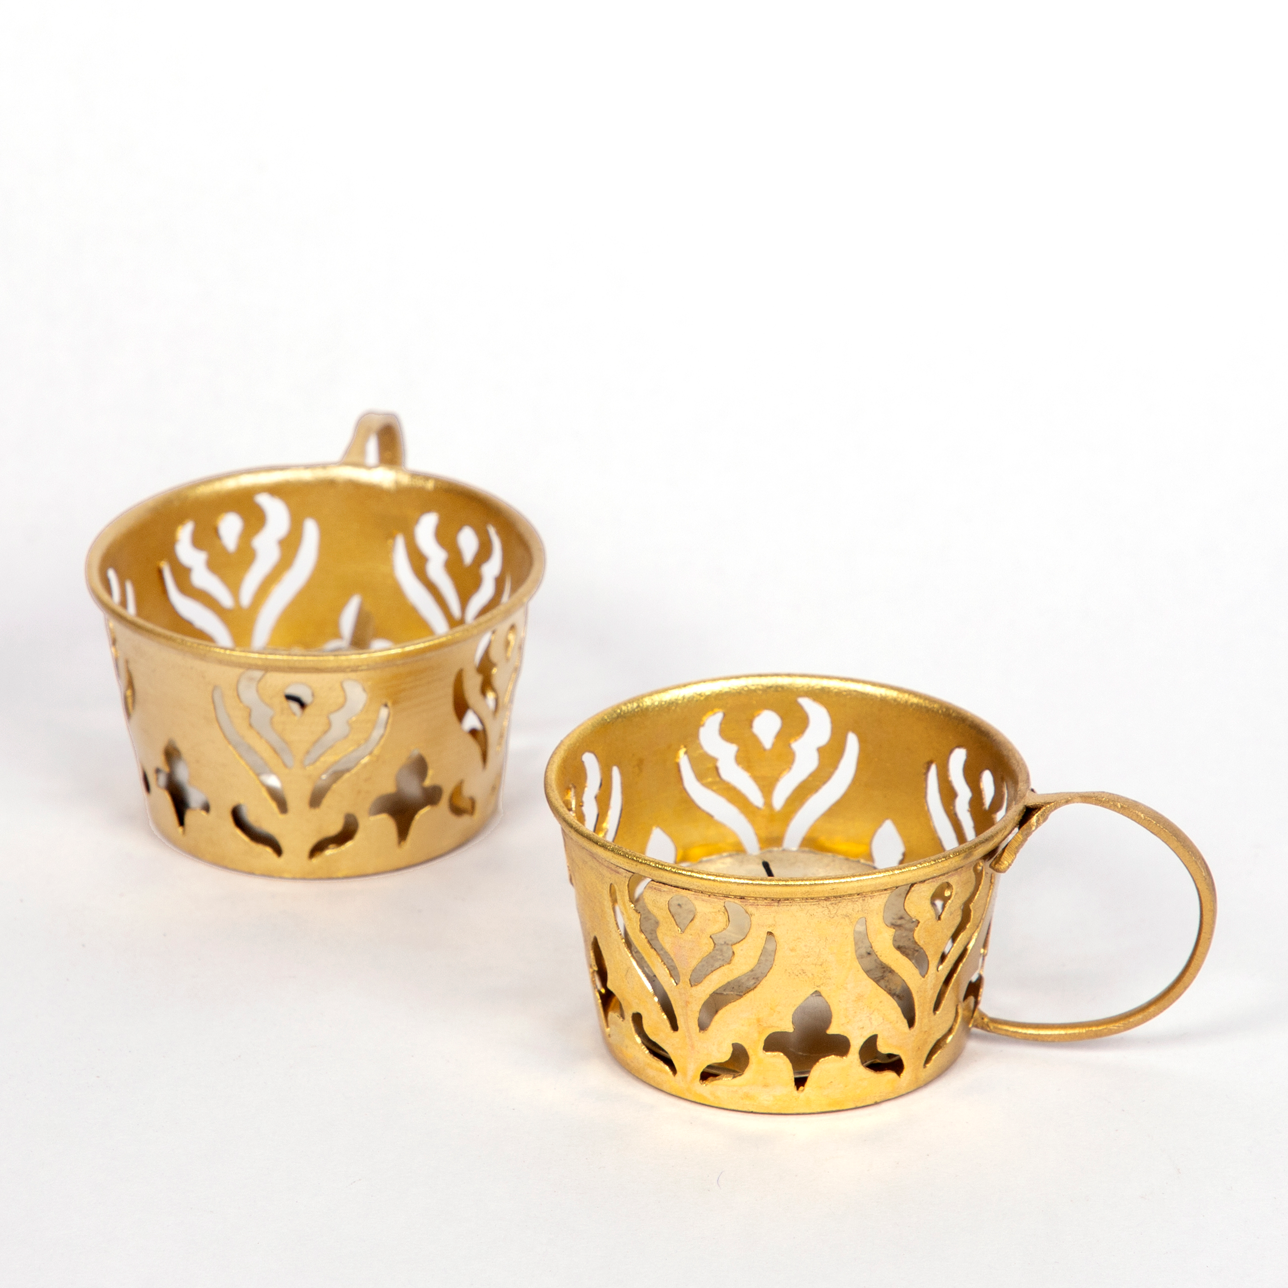 New Victoria Tea Light Holder Lighting Fragrance Decor Brass Tealight CUp